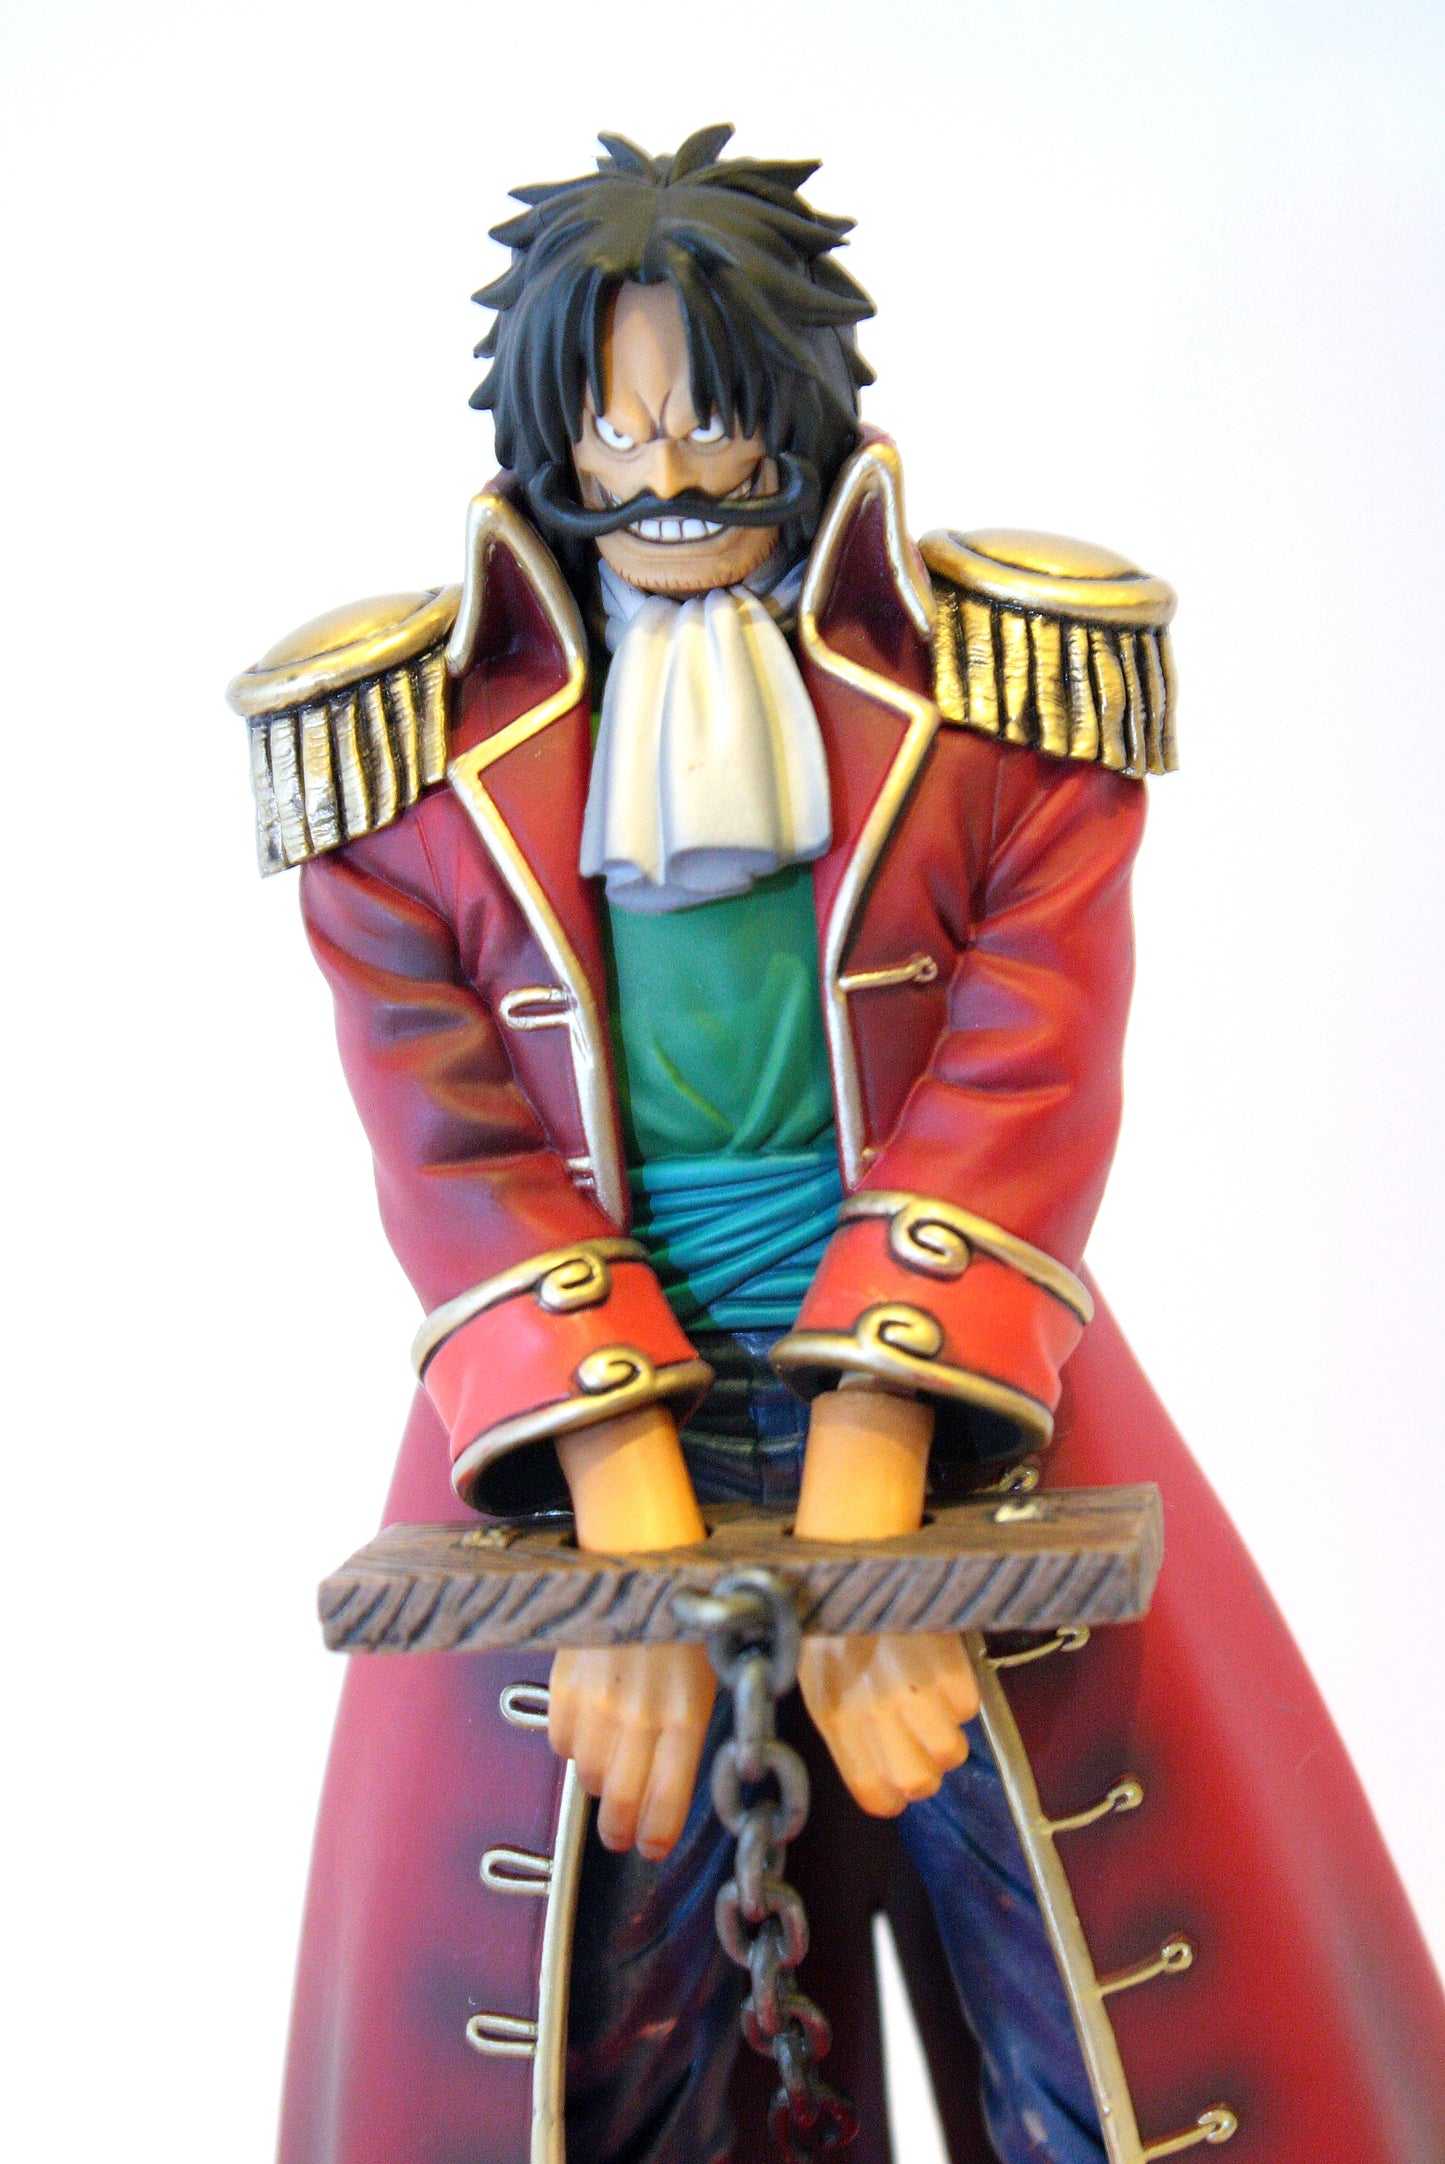 One Piece - Gol D. Roger - DX Figure Vol. II Authentic Figure